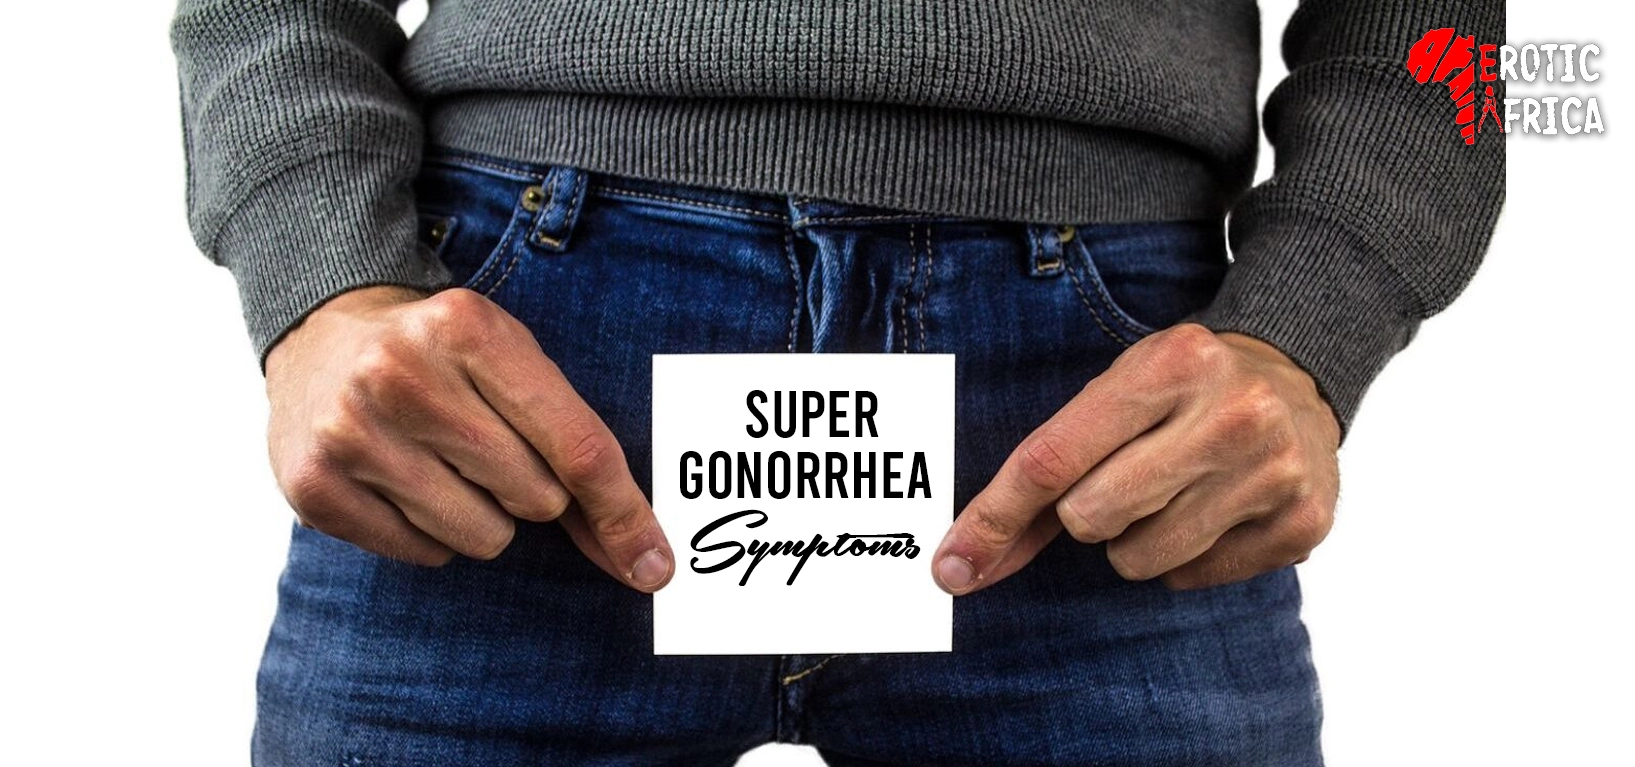 Super gonorrhea